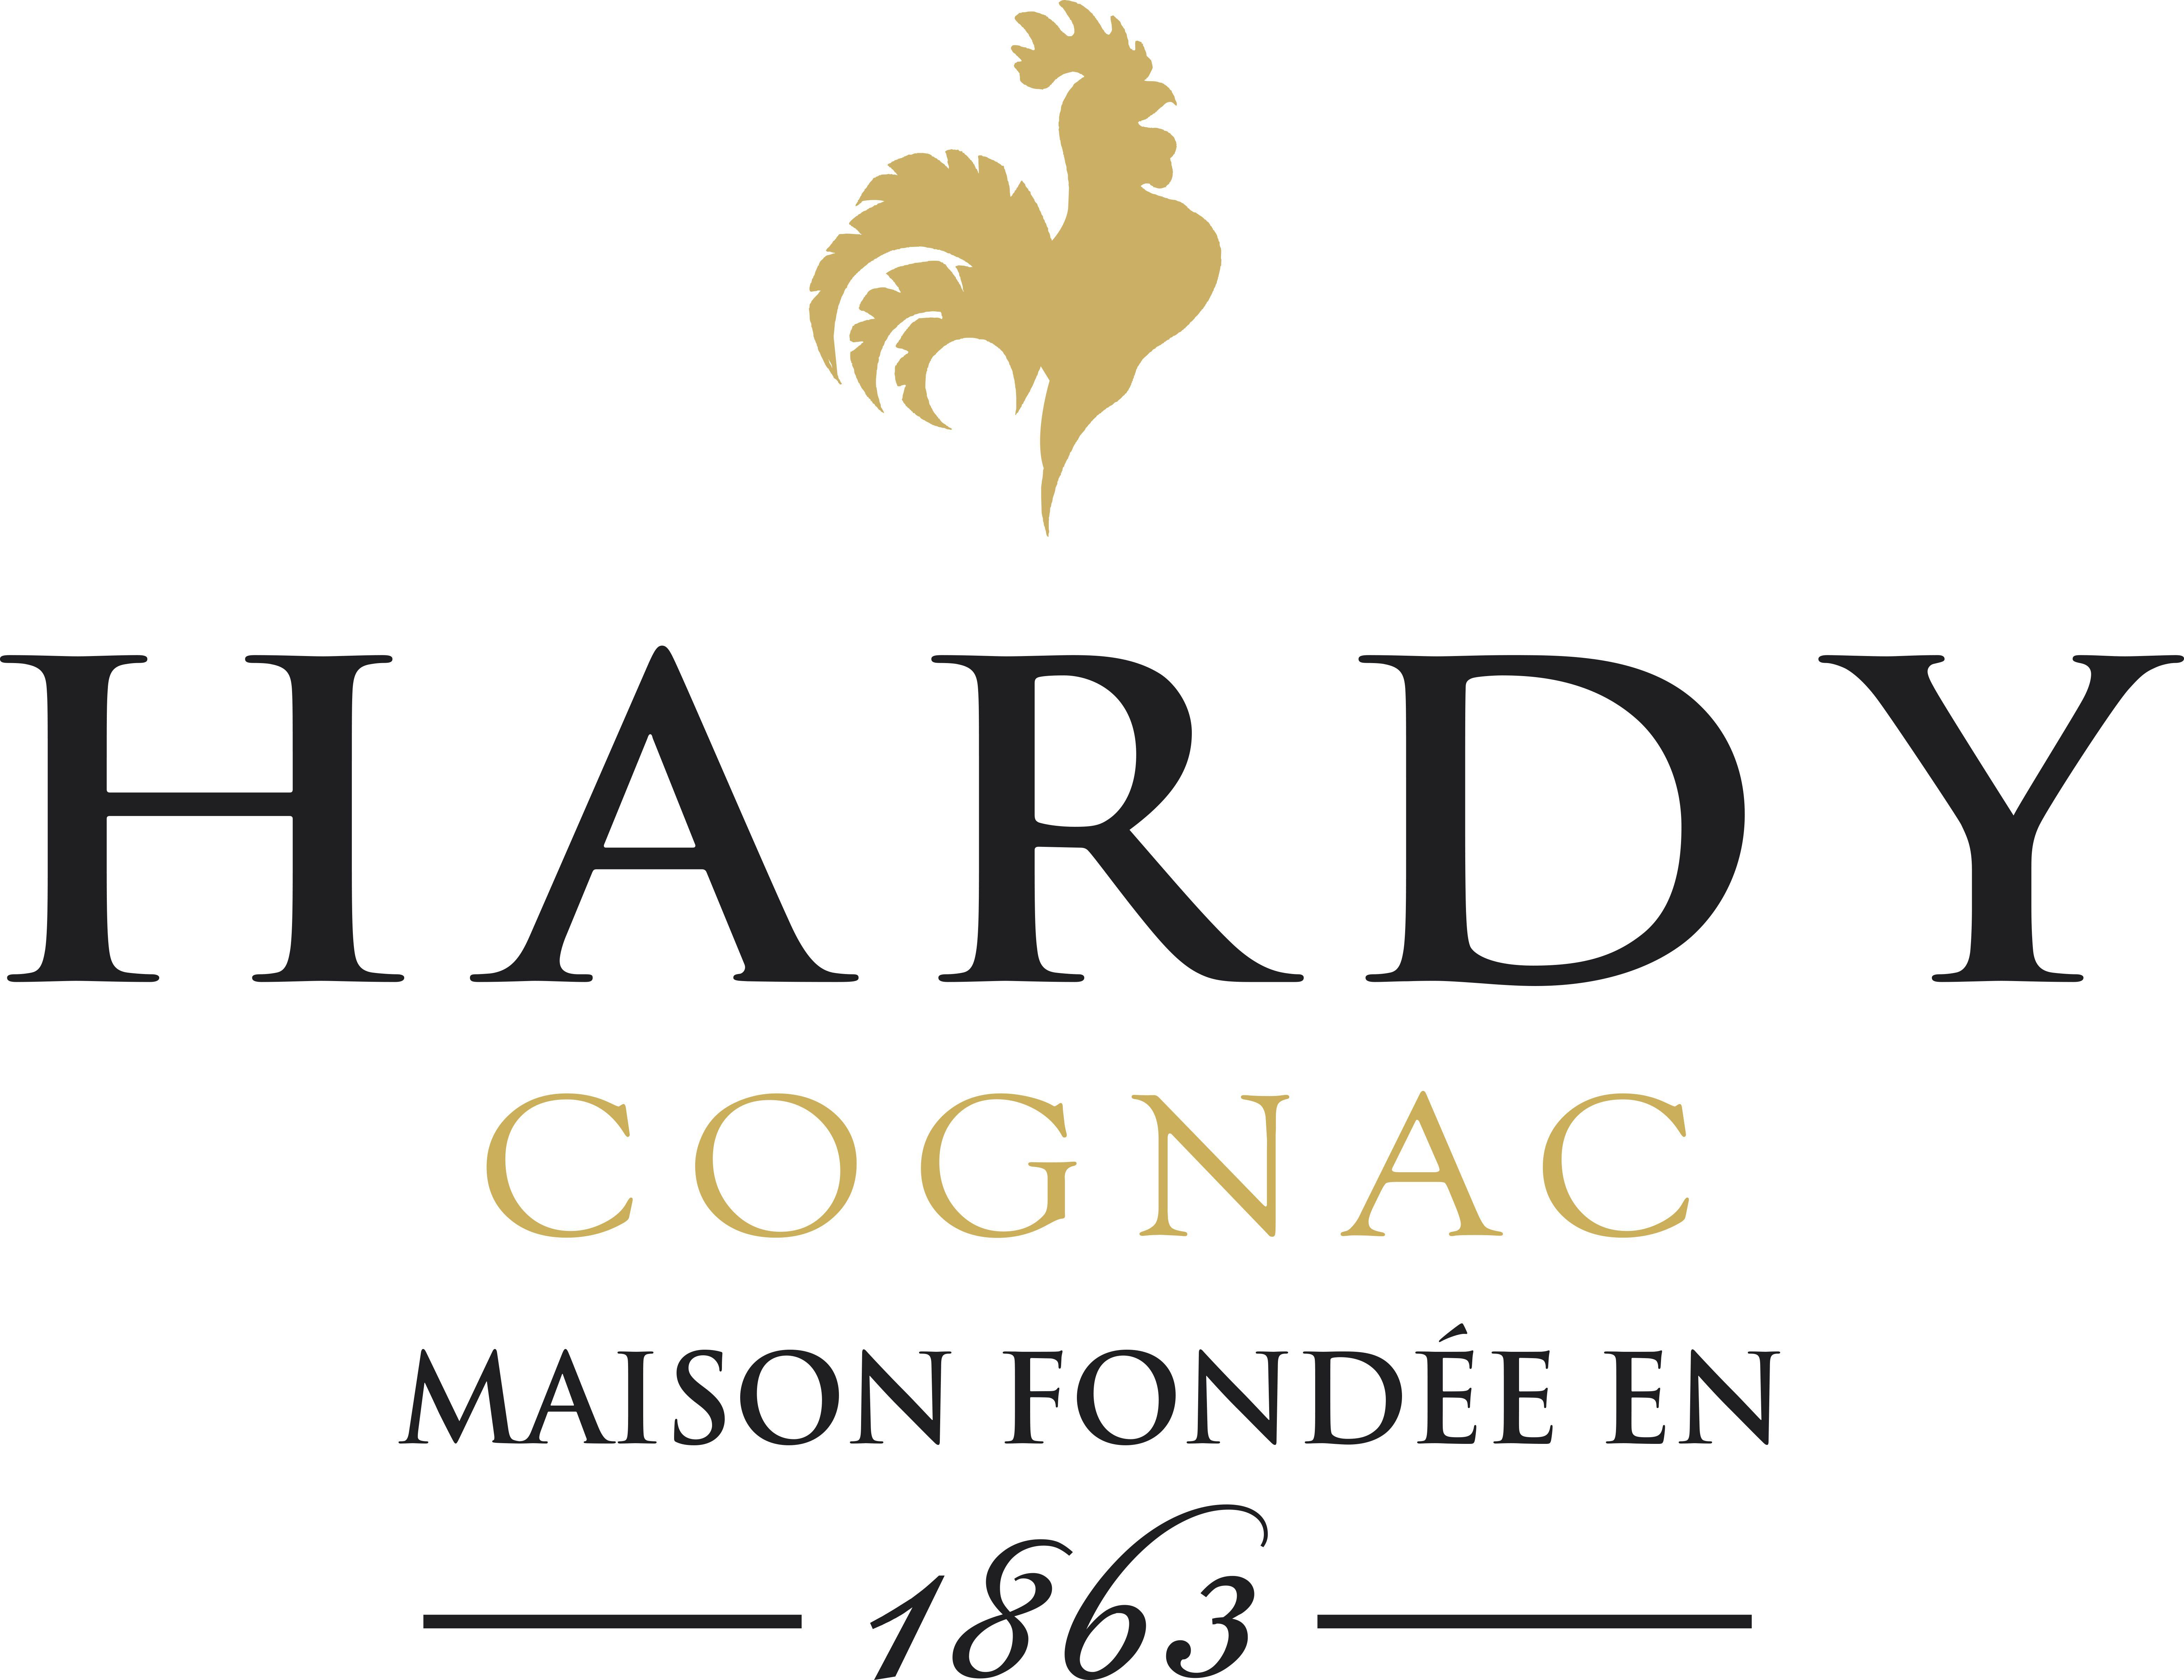 Congac Logo - An Evening of Cognac and Chocolate - Alliance Française Mpls/St Paul